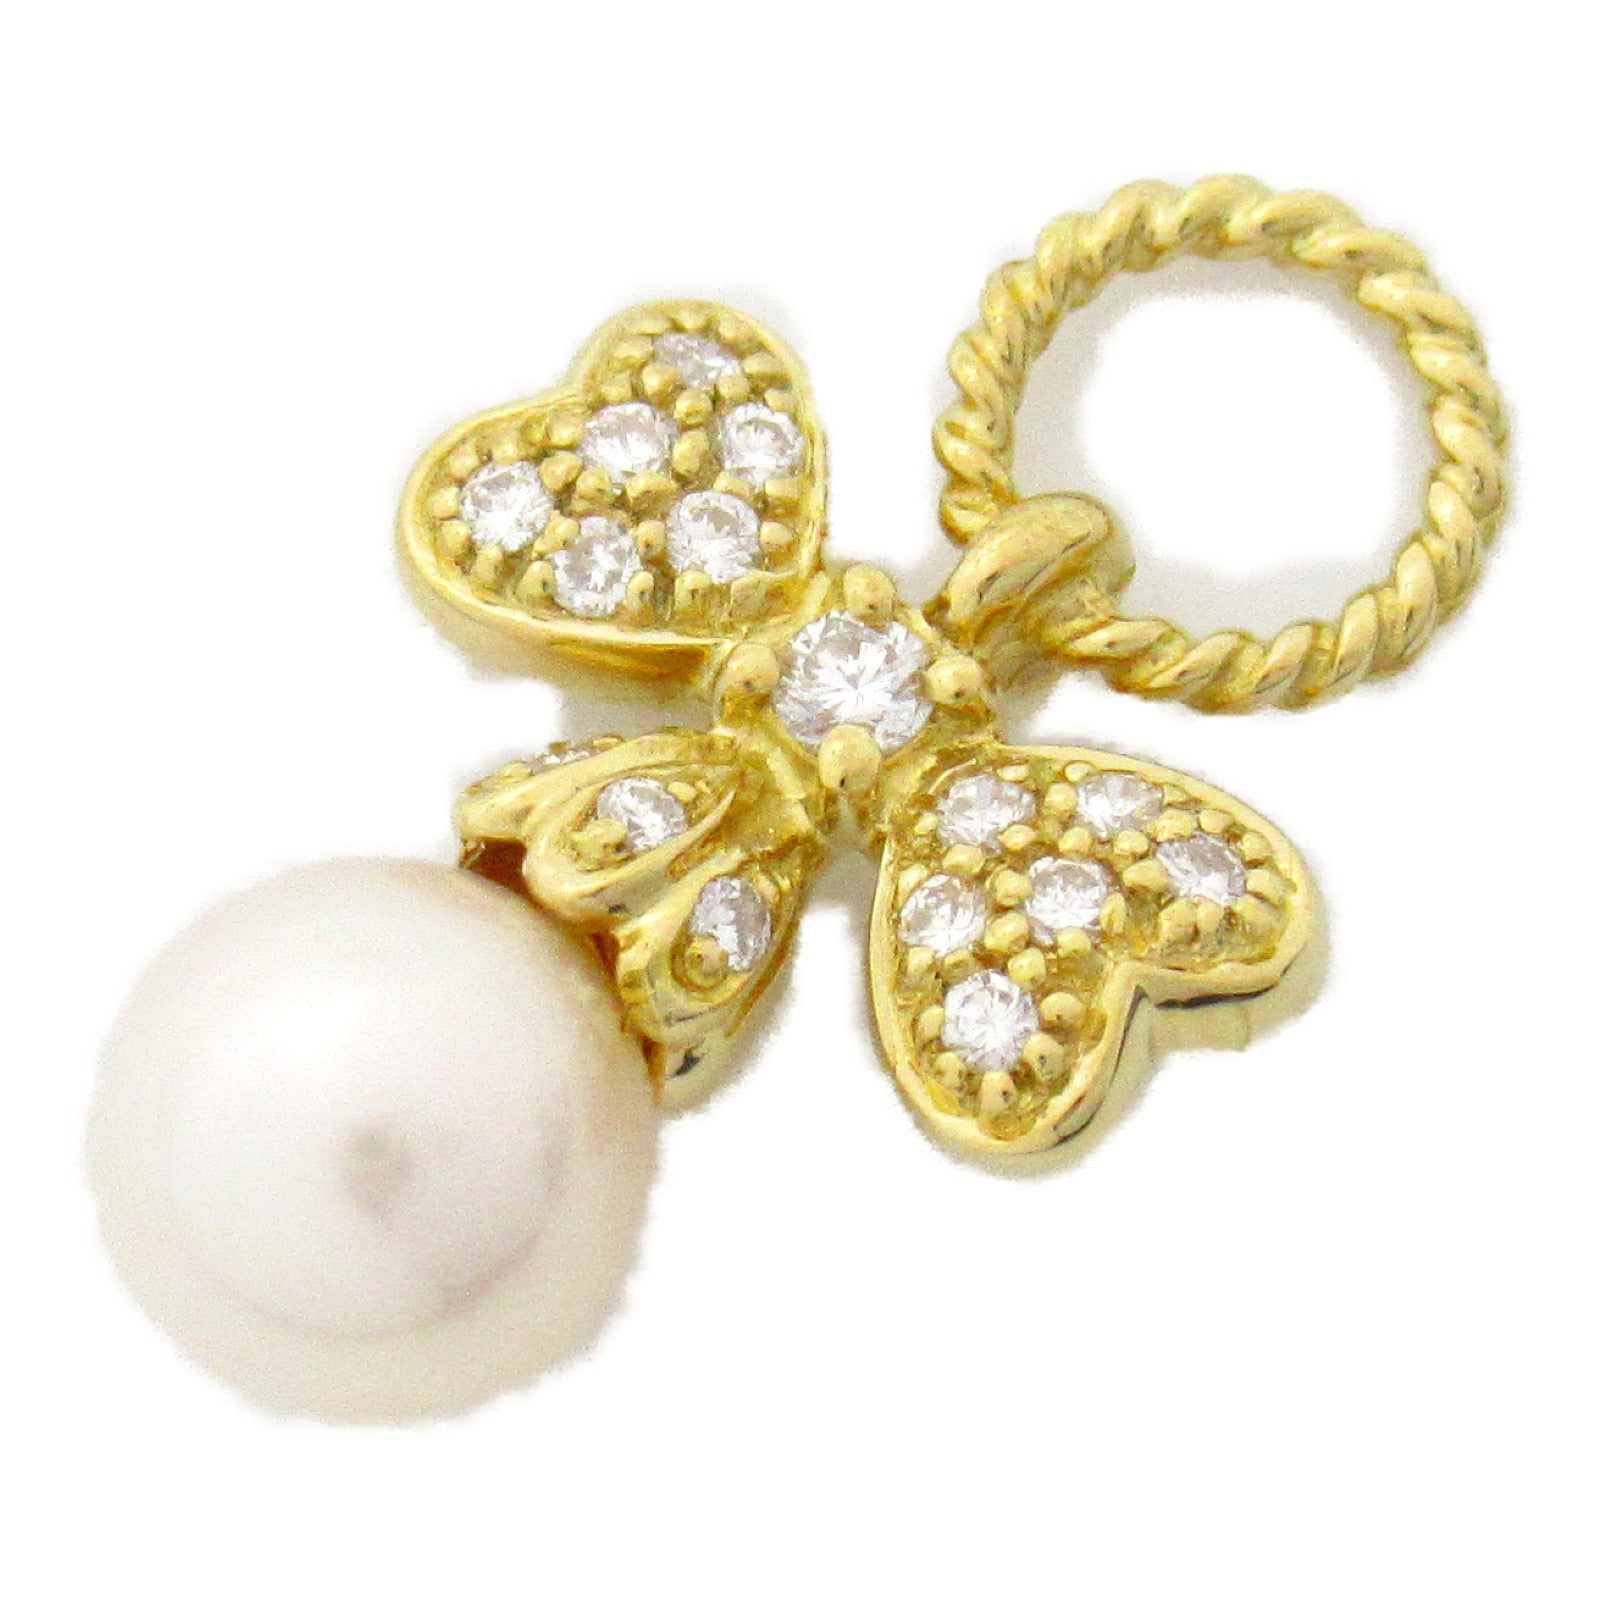 Ponte Vecchio Pearl Diamond Top Pendant Top Jewelry K18 (yellow g) Diamond Pearl  Clear/White